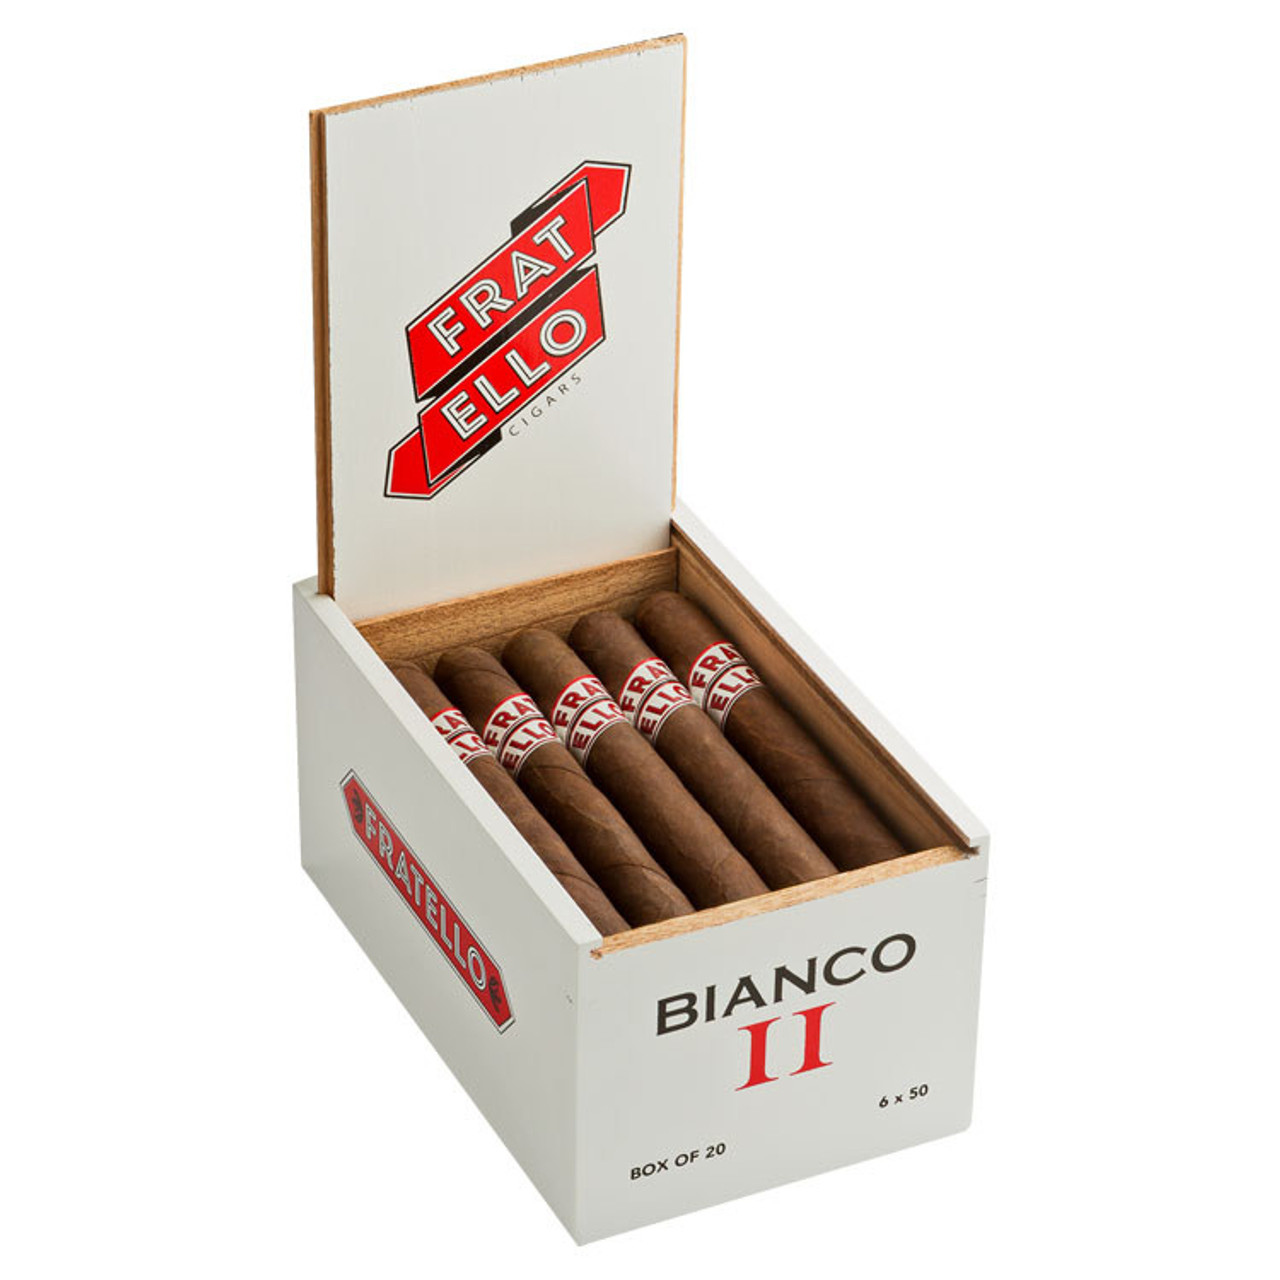 Fratello Bianco Bianco II Cigars - 6 x 50 (Box of 20) *Box